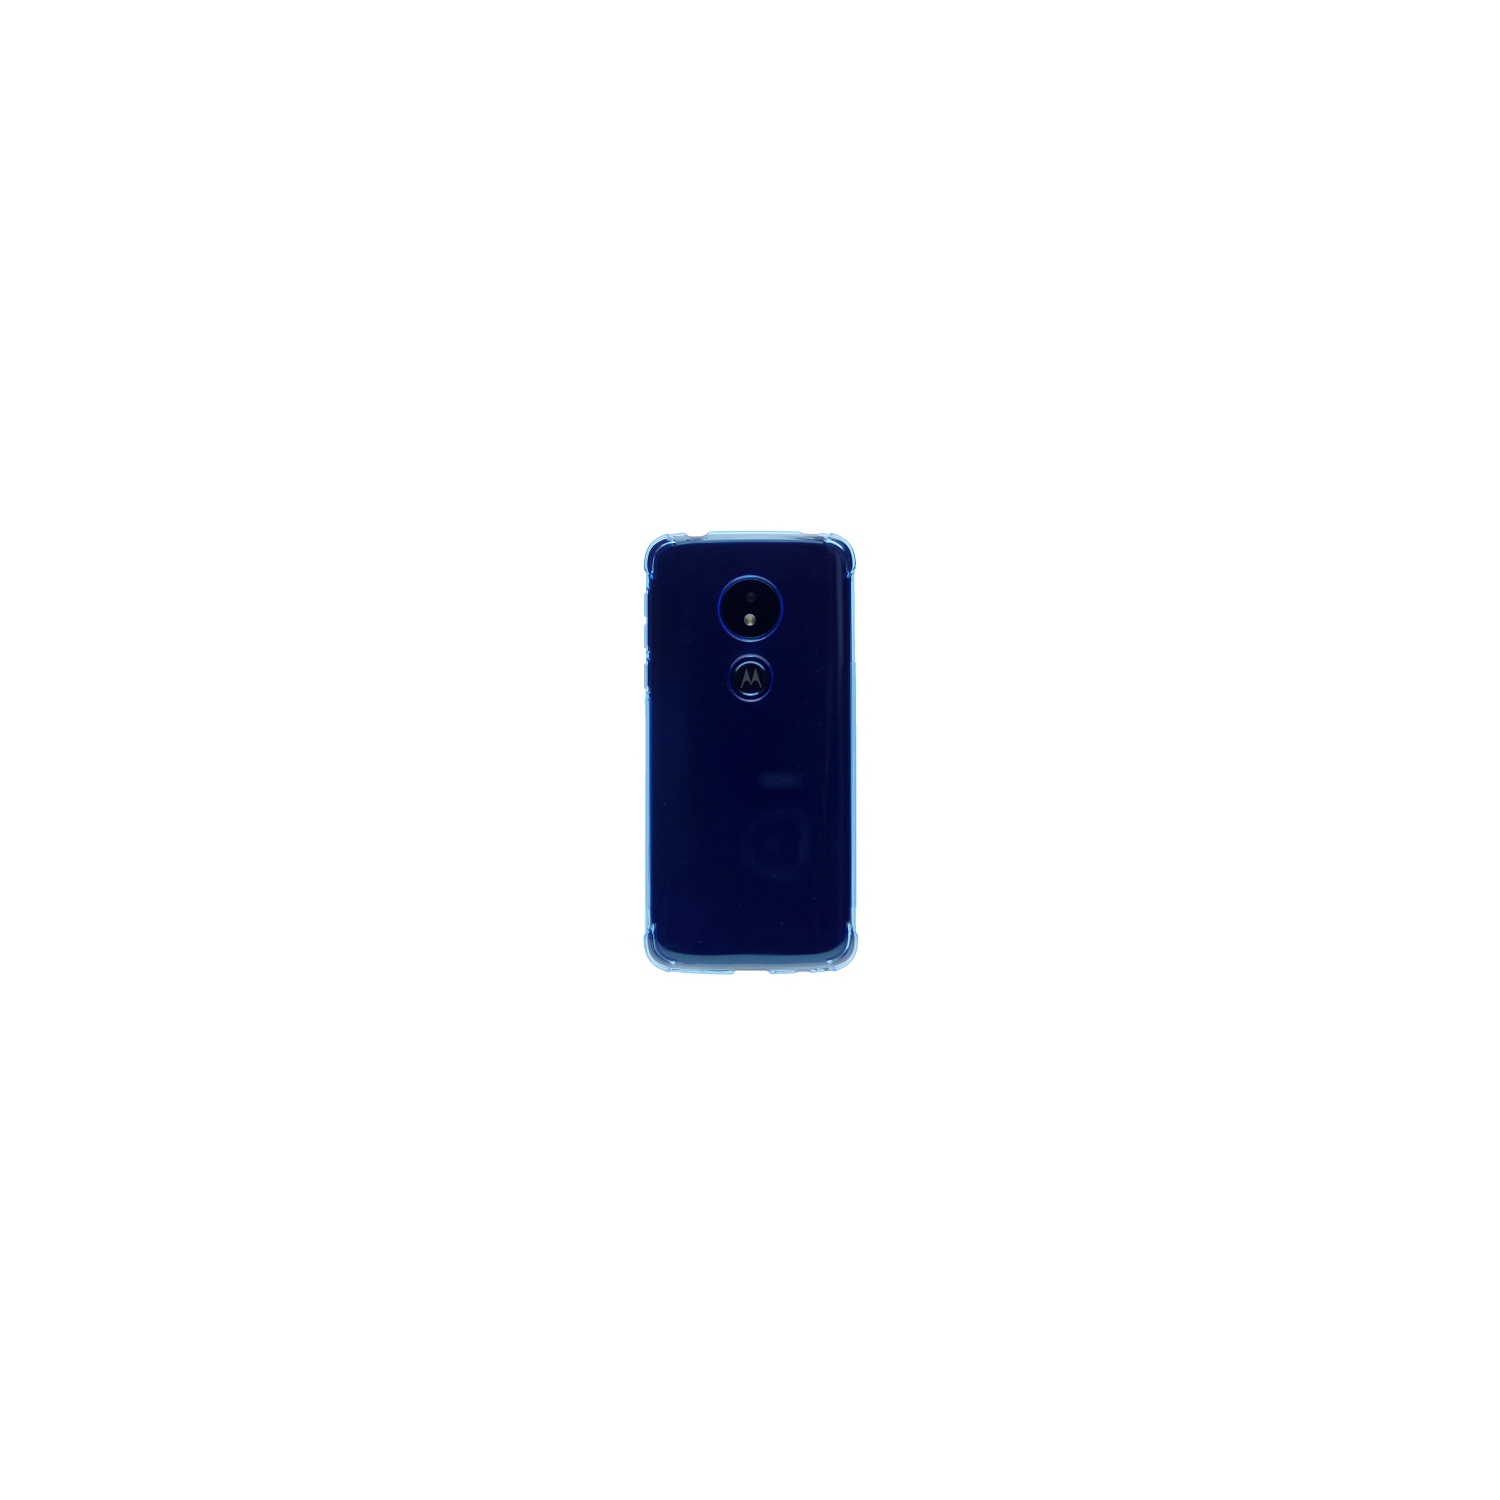 (Canadain Version) Motorola G6 Play Soft TPU Case, w/Extra Corner Protection, Blue